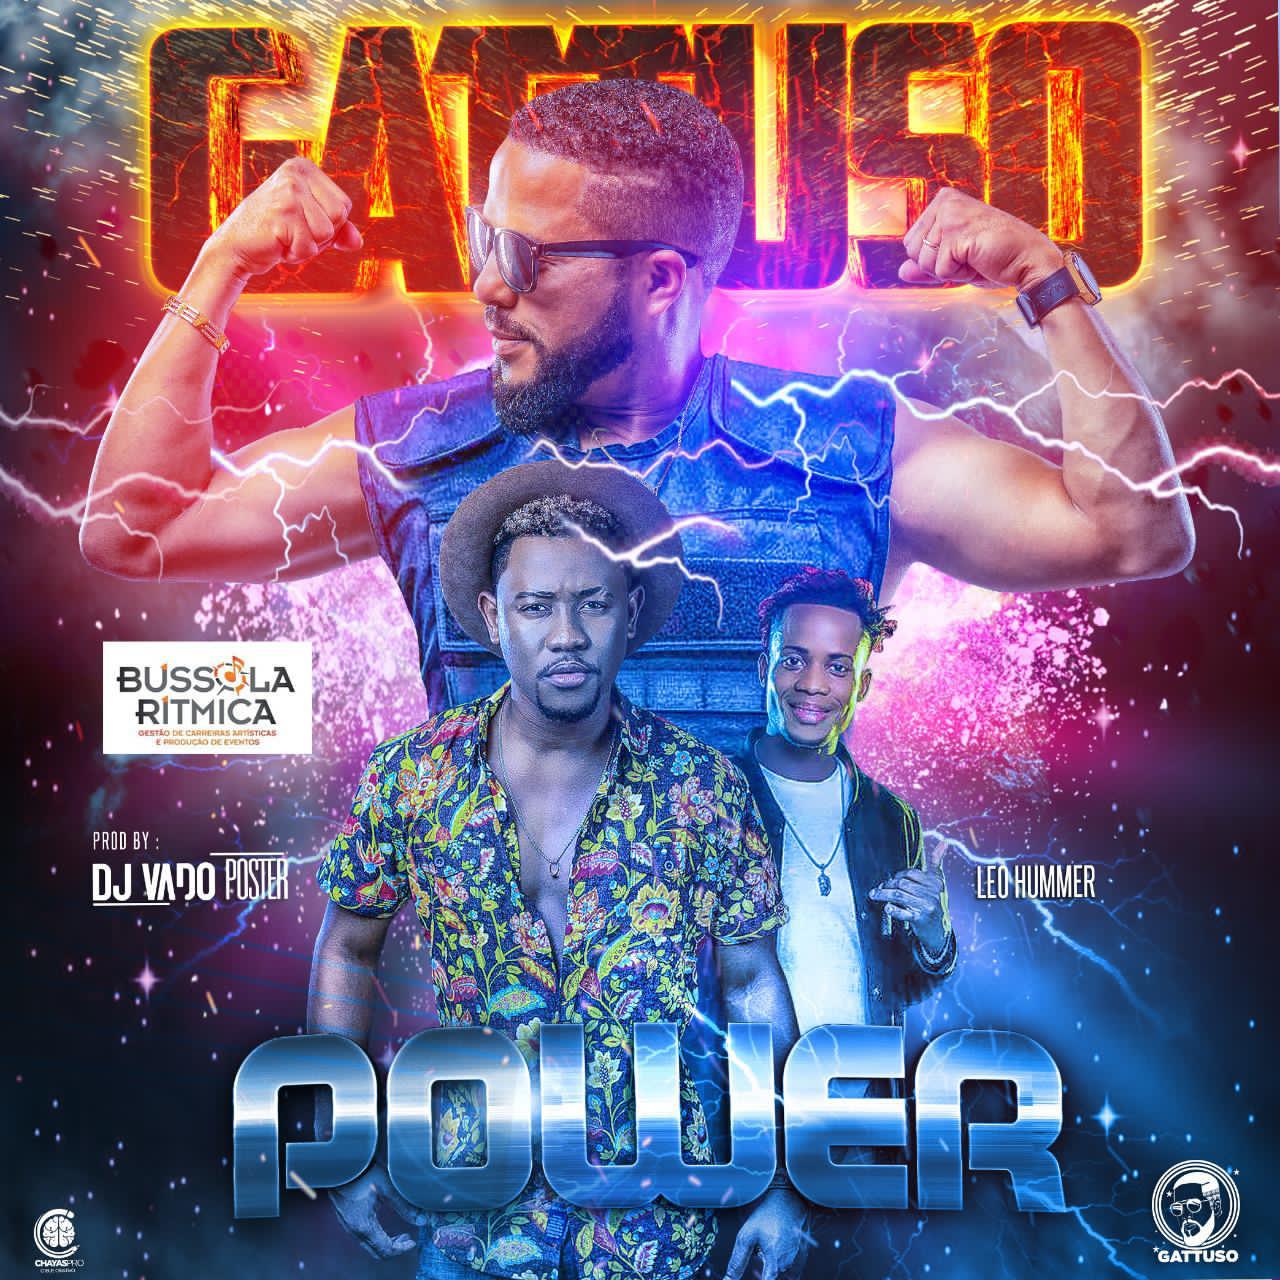 Gattuso - Power (feat. DJ Vado Poster & Leo Hummer)